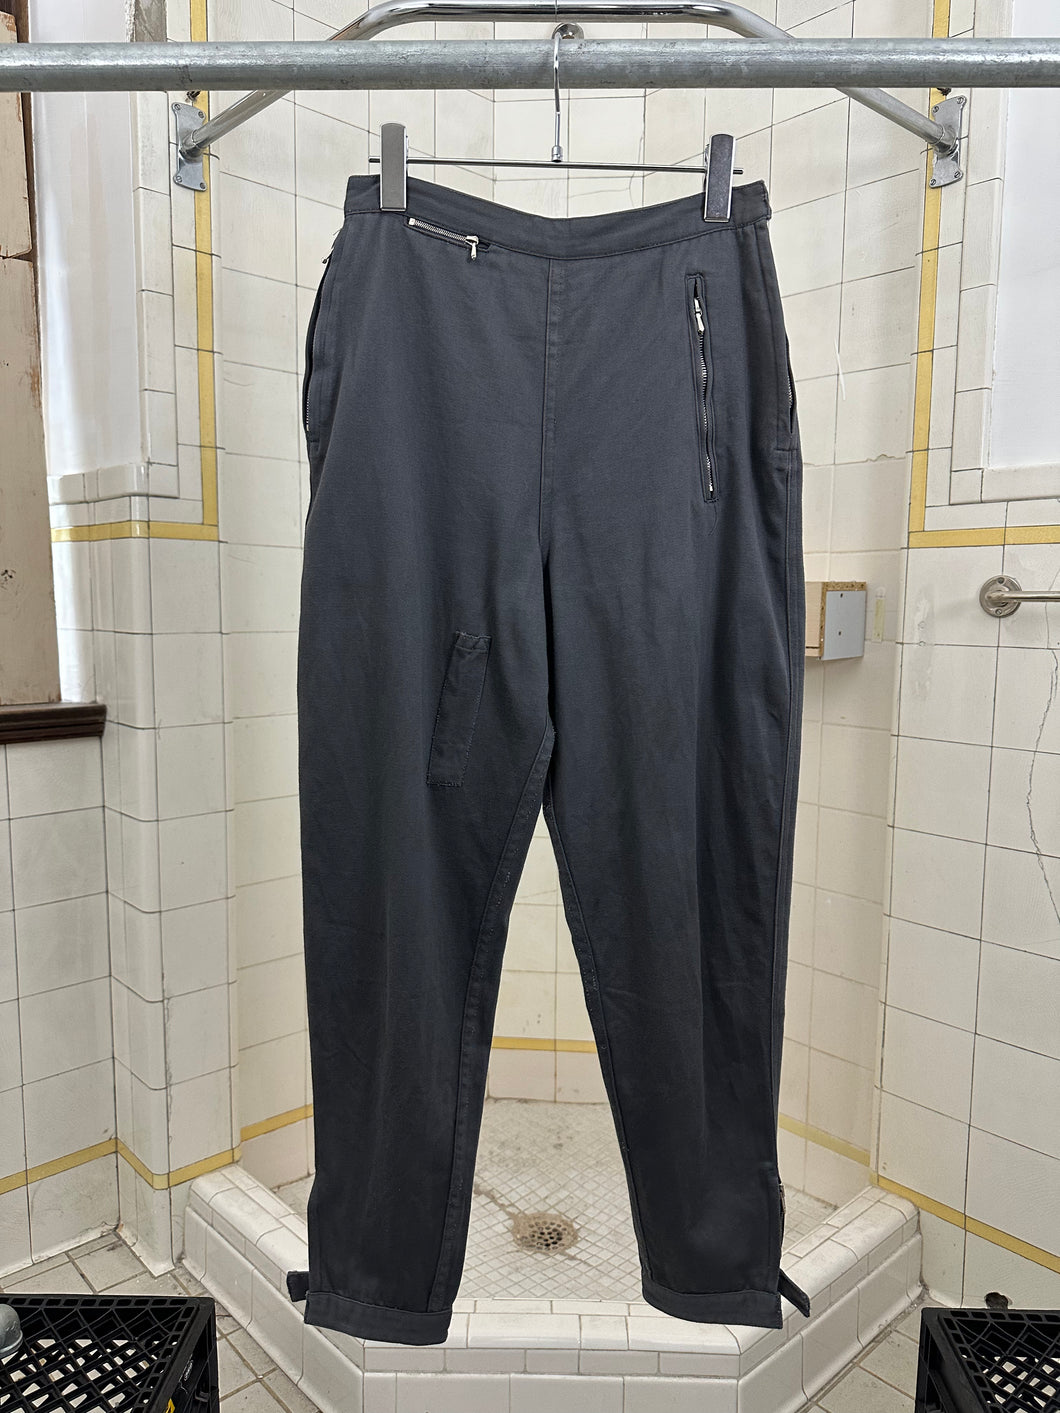 1980s Katharine Hamnett Women’s Tapered Trousers - Size M